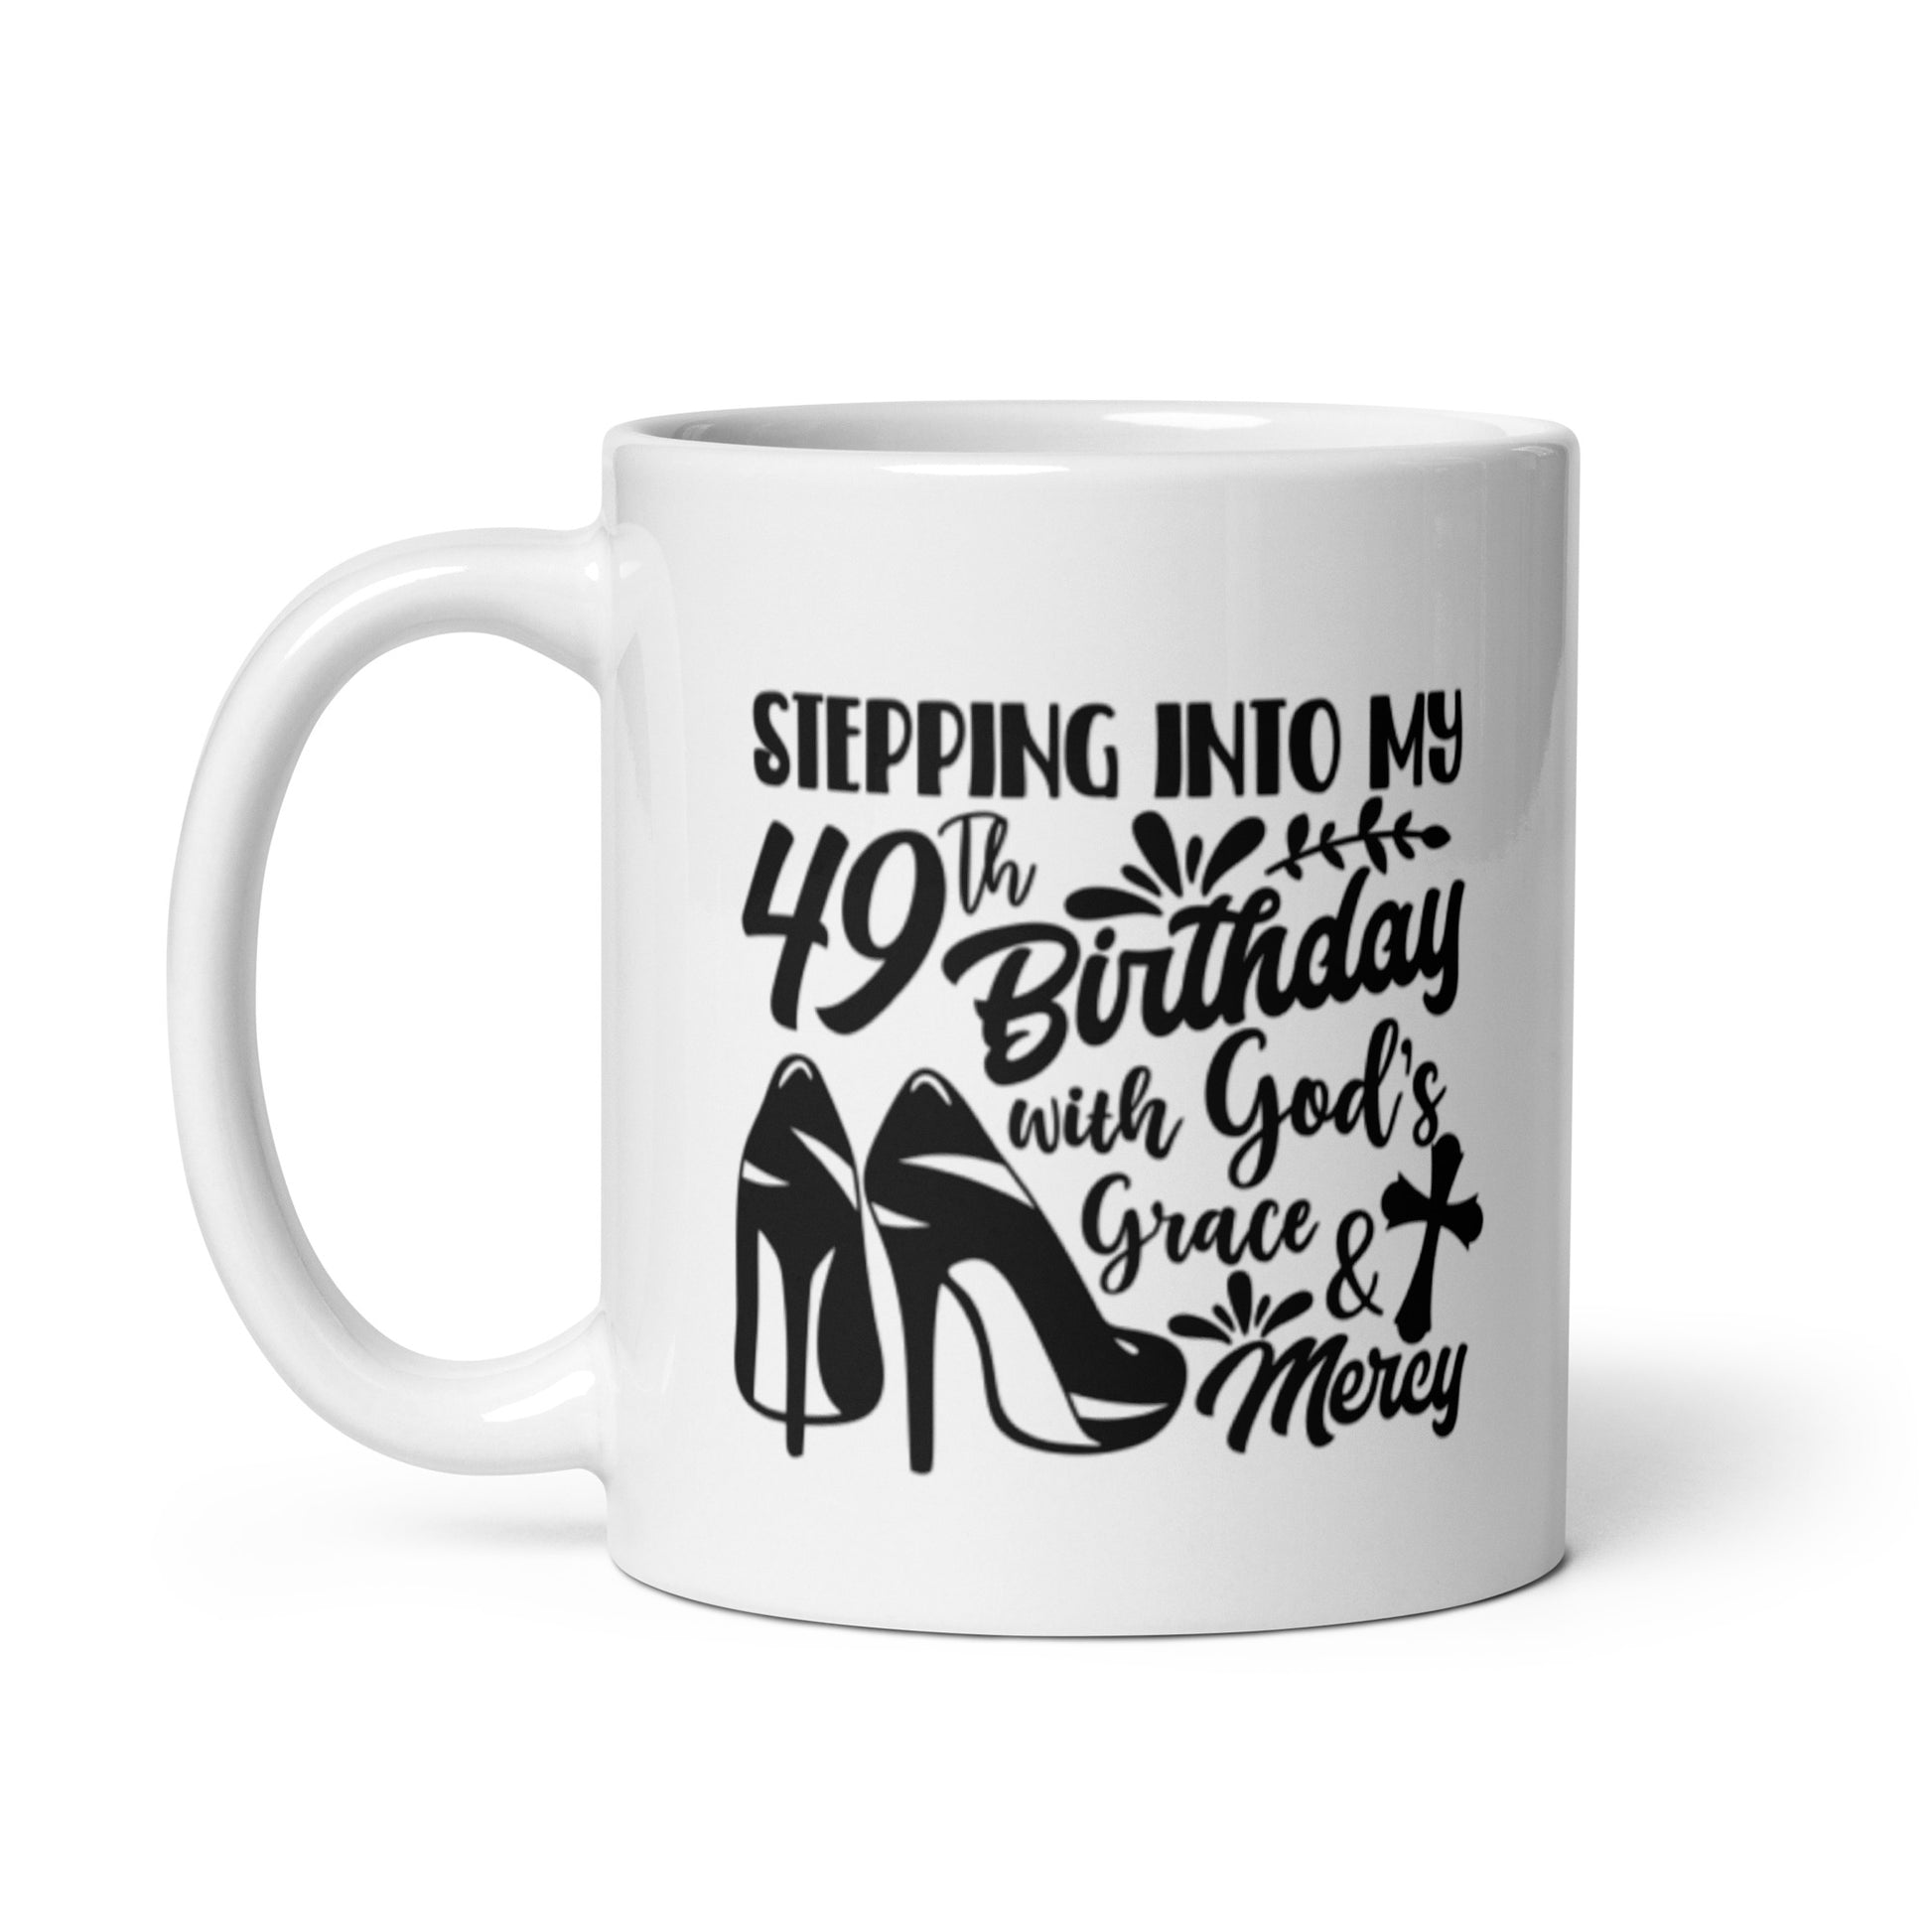 Stepping Into My 49th Birthday with God's Grace & Mercy White Ceramic Mug